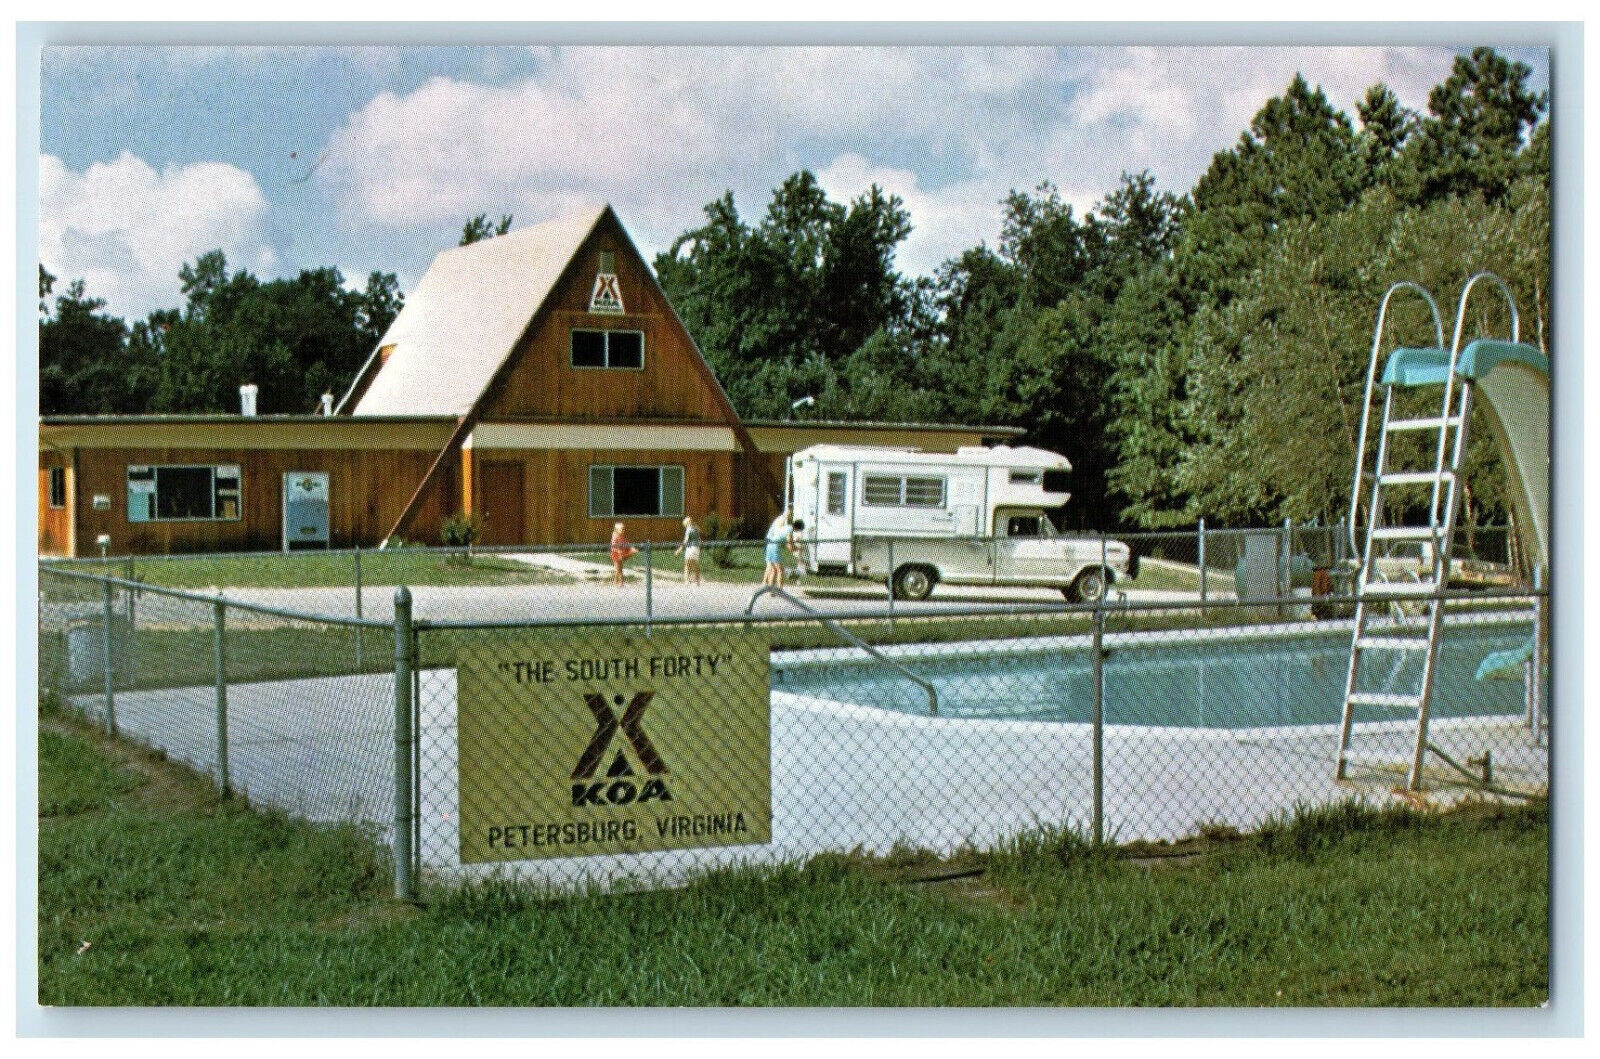 c1950s Swimming Pool, The South Forty Koa Petersburg Virginia VA Postcard